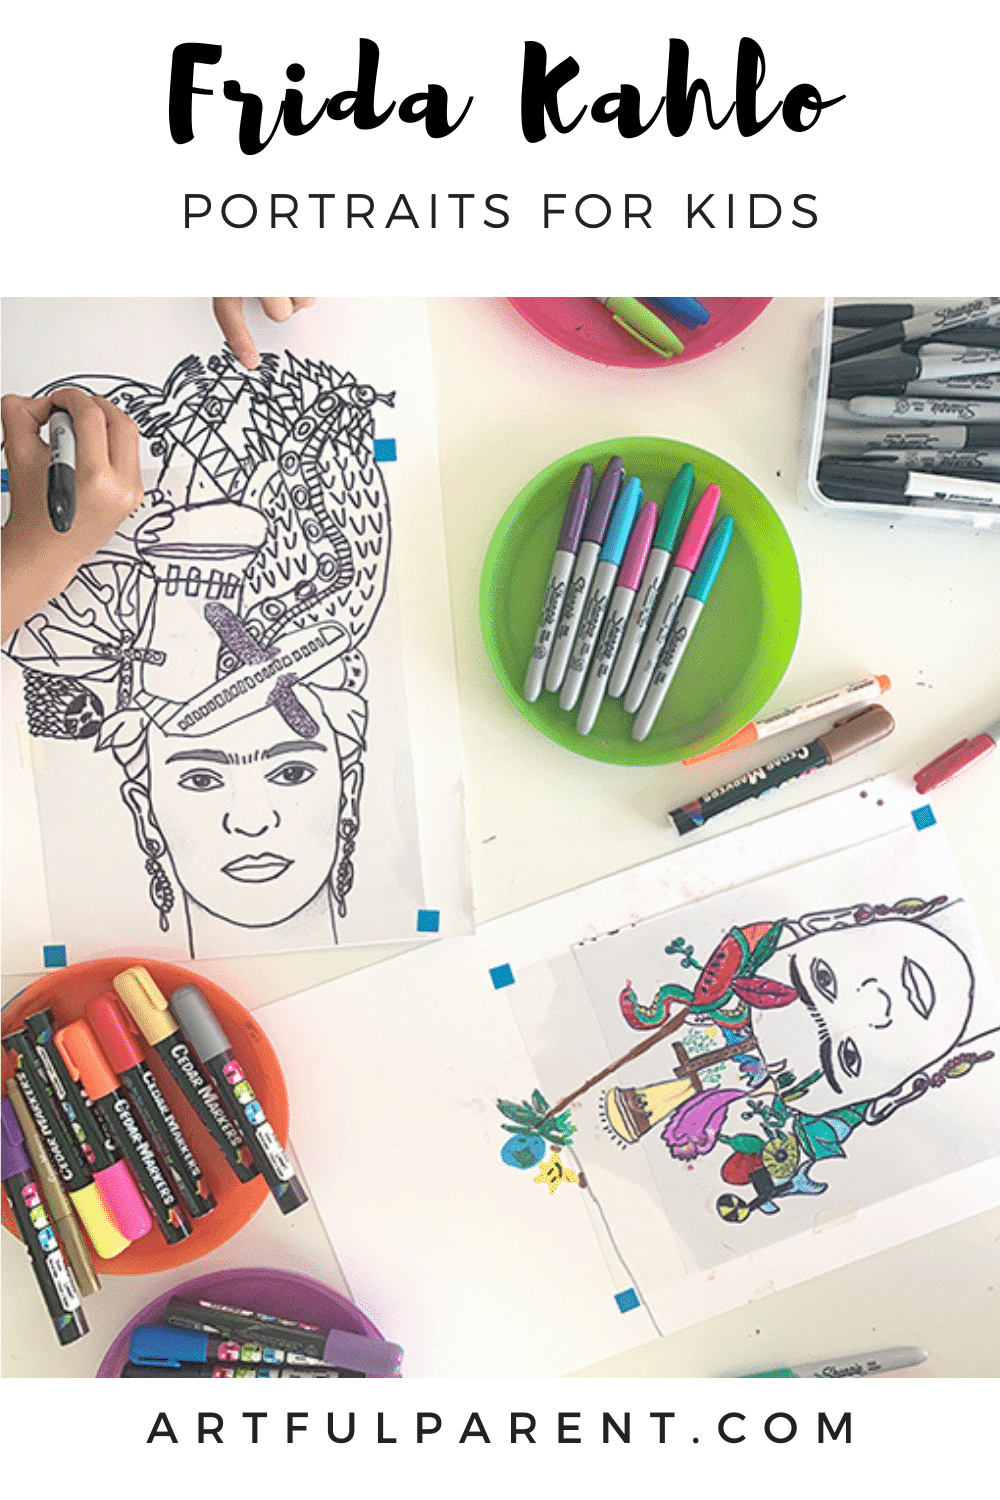 How to Make Frida Kahlo Portraits for Kids